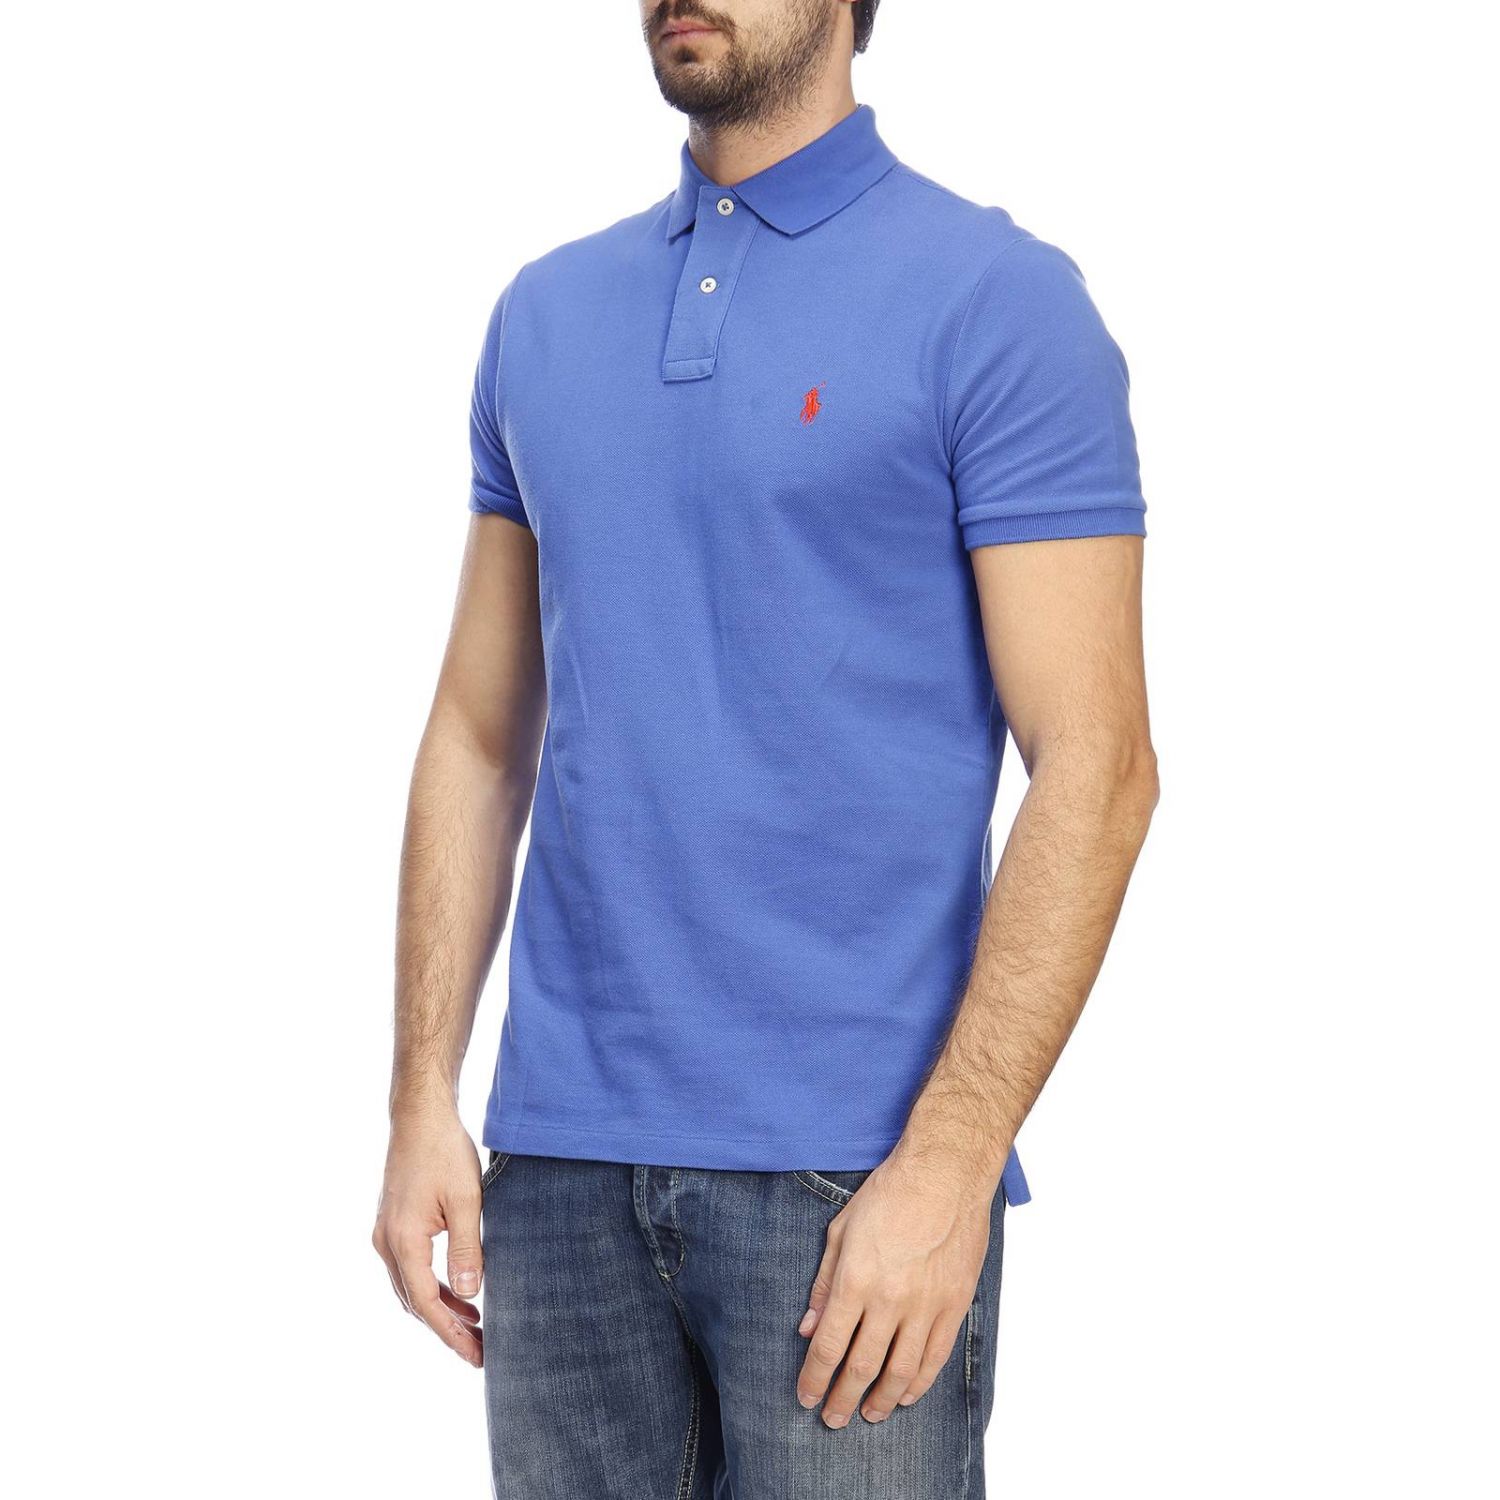 Polo Ralph Lauren Outlet: T-shirt men - Gnawed Blue | Polo Shirt Polo ...